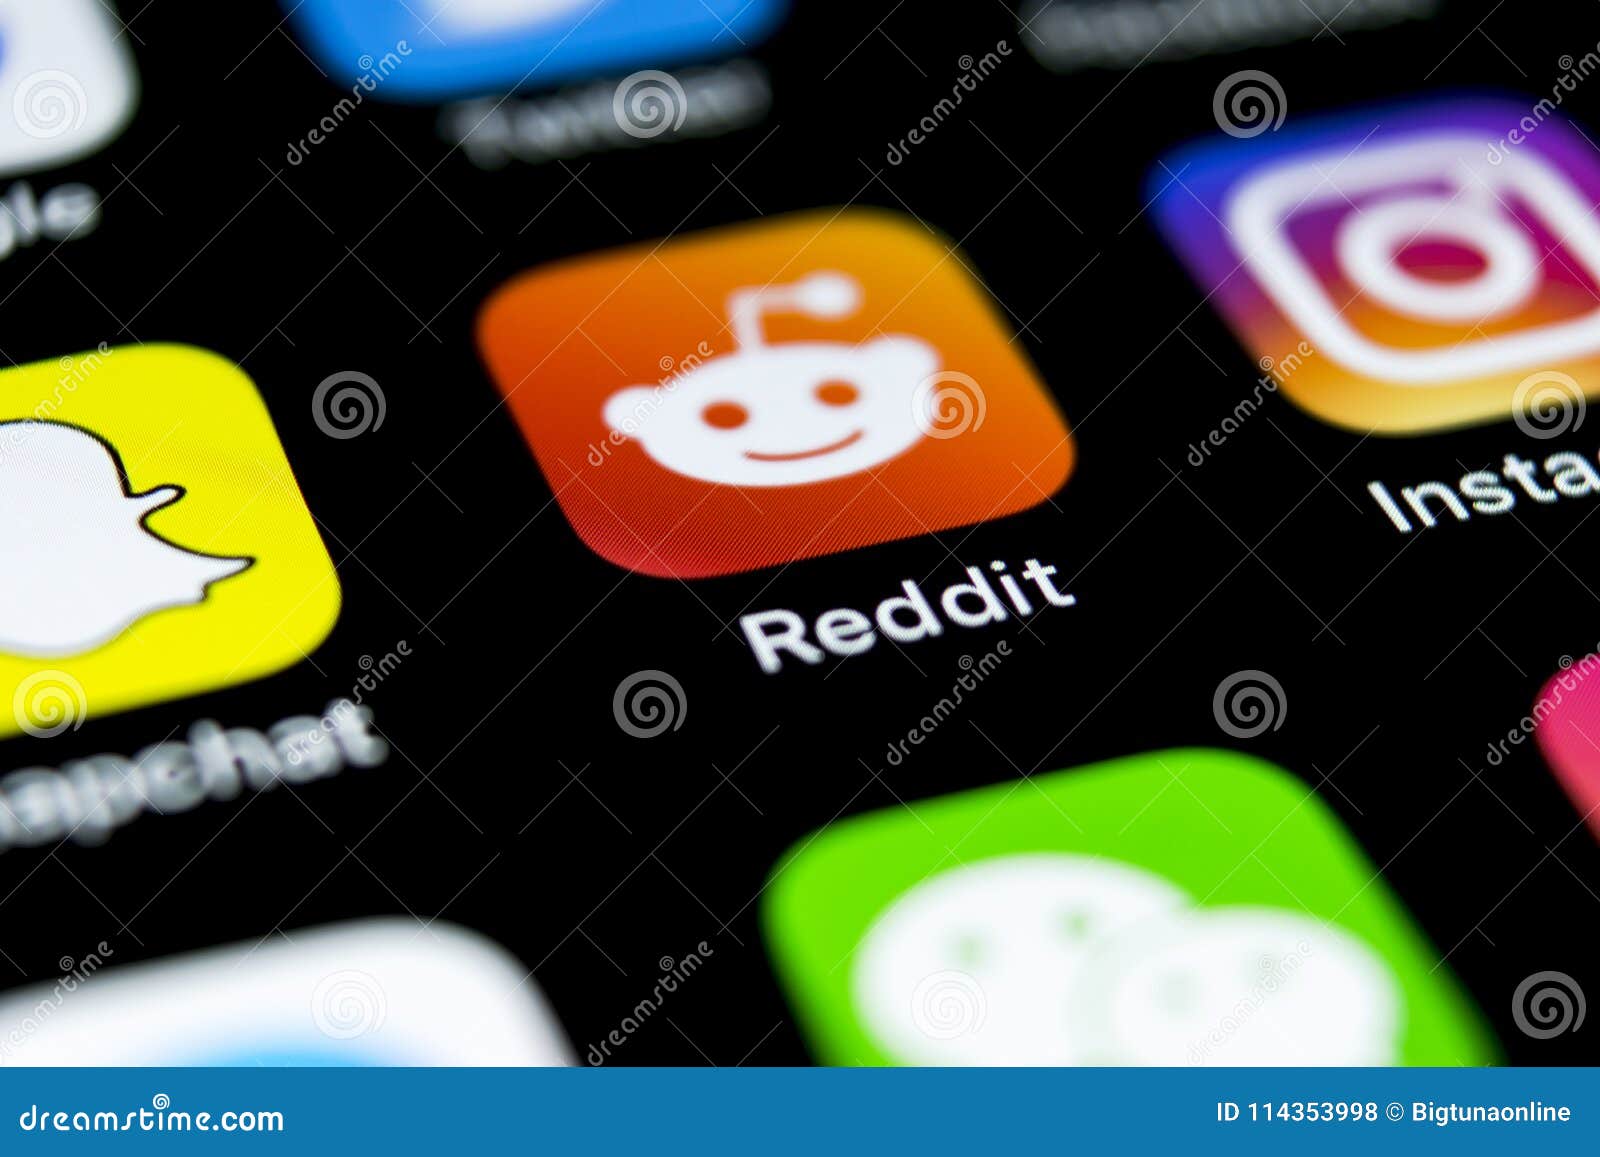 Reddit Application Icon On Apple Iphone X Smartphone Screen Close